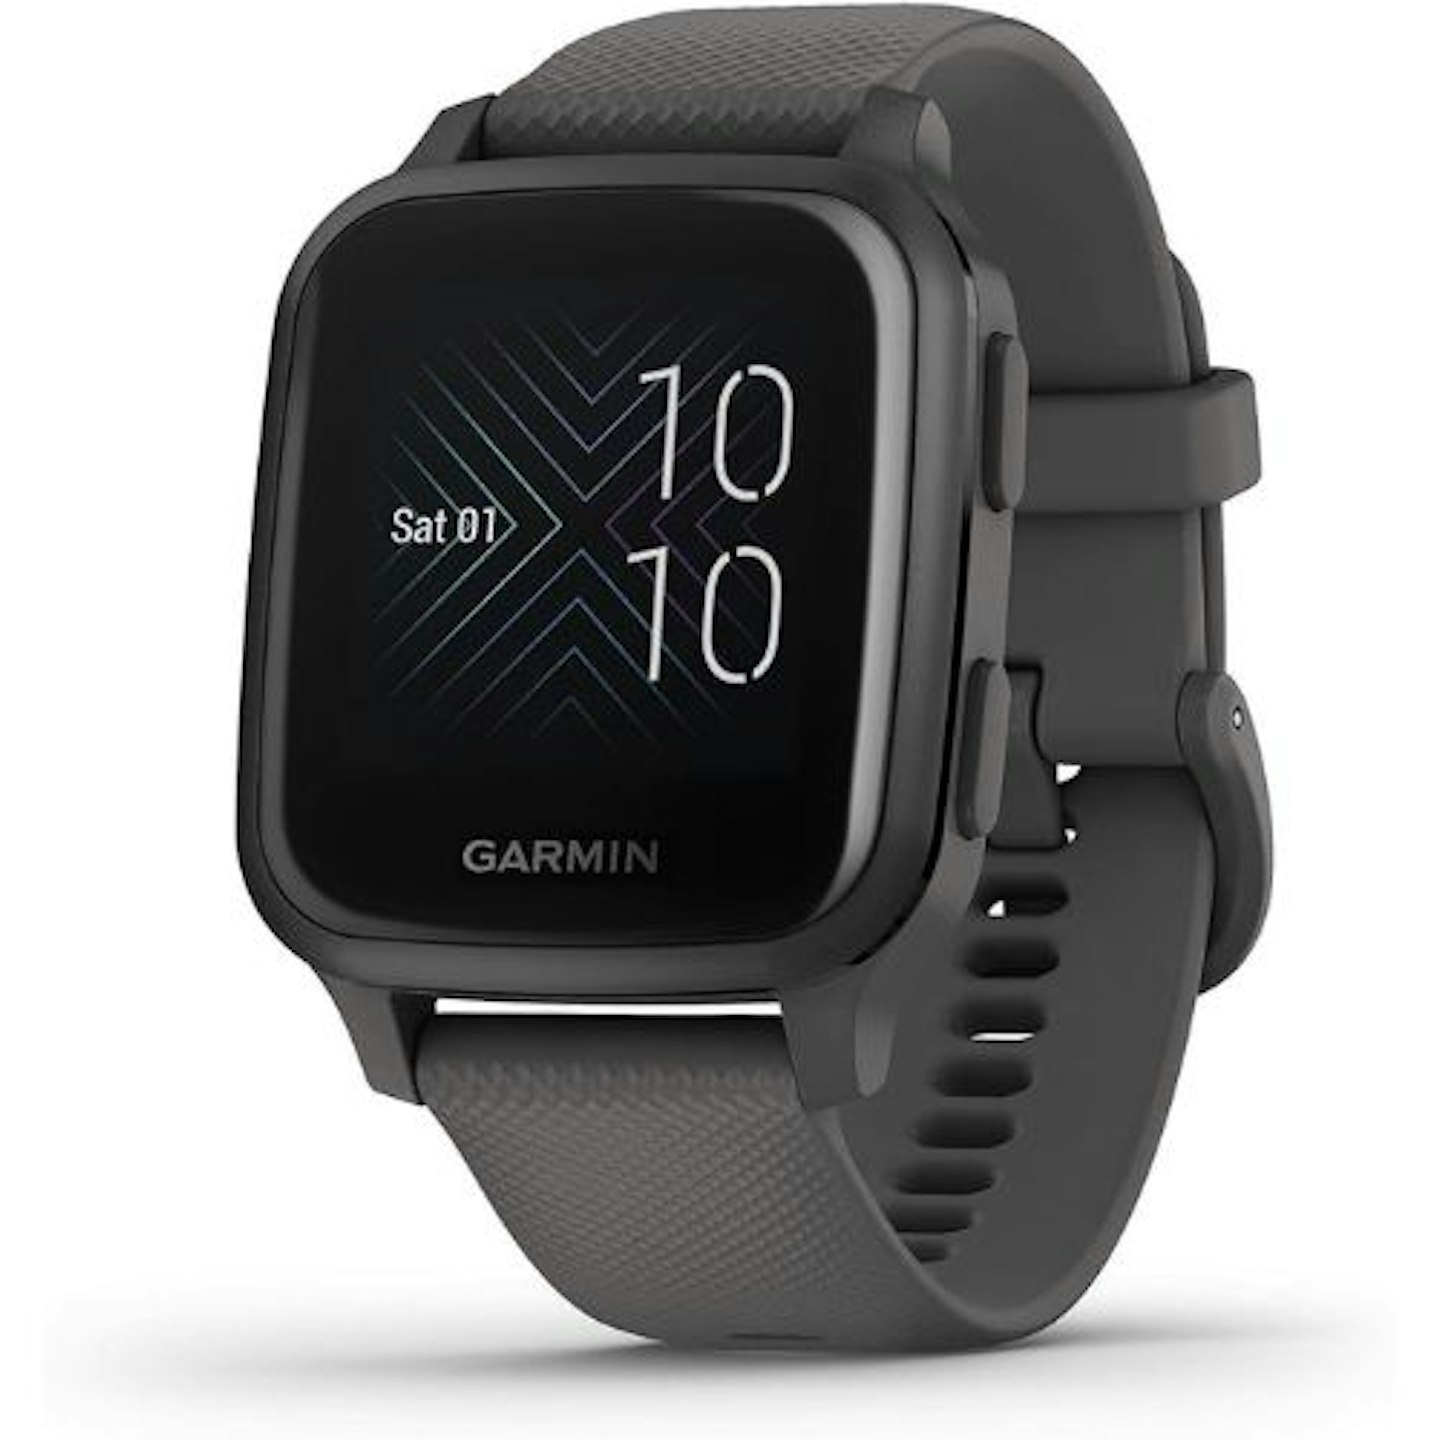 Garmin Venu Sq GPS Smartwatch